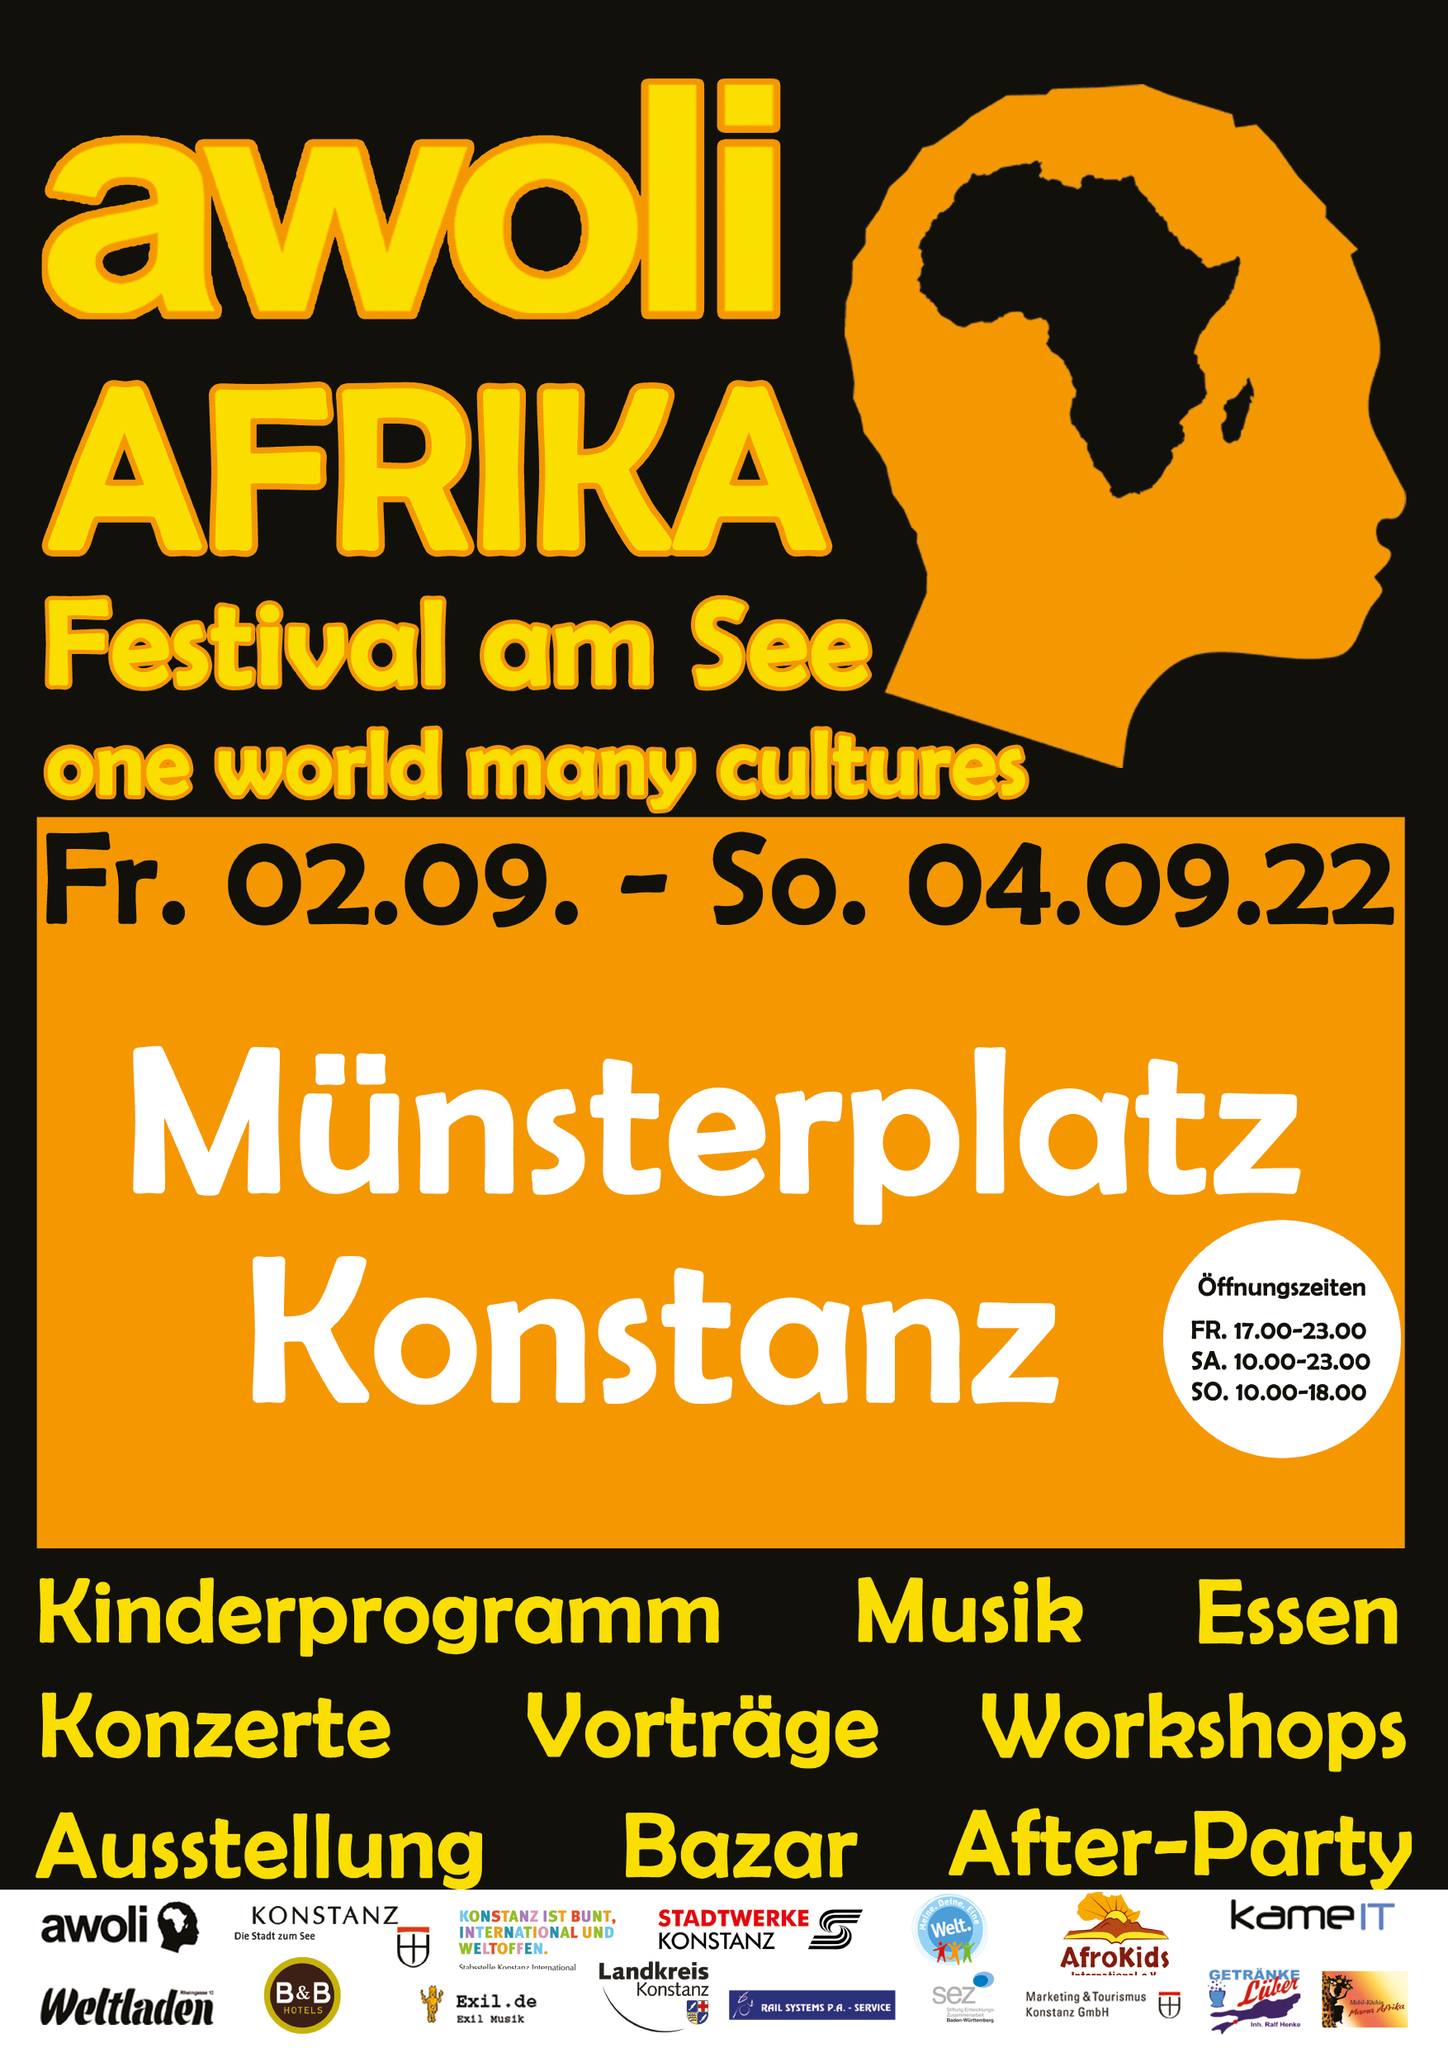 Awoli Afrika Festival am See